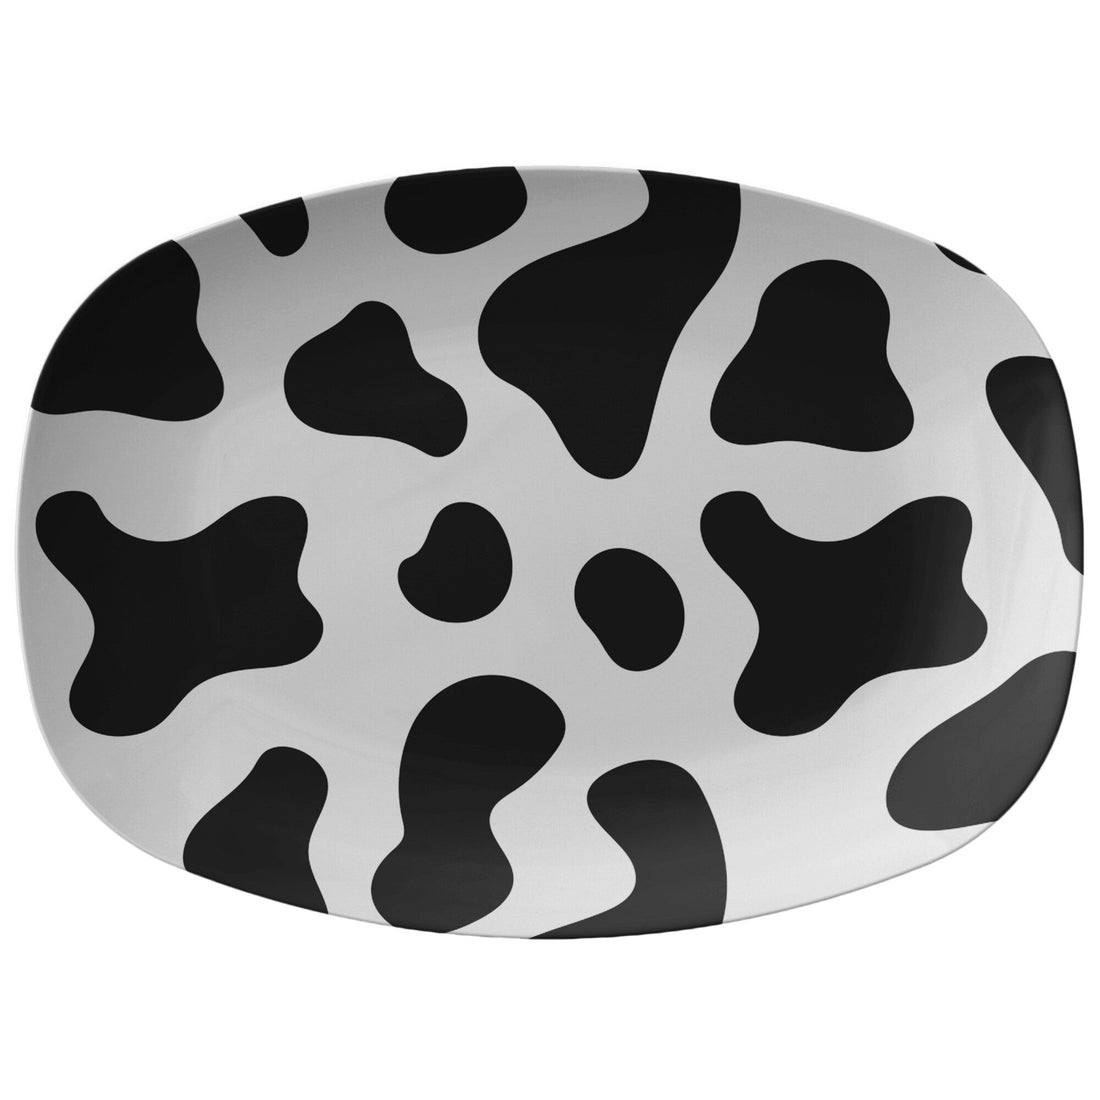 Kate McEnroe New York Serving Platter in Black and White Cow PatternServing Platters9727